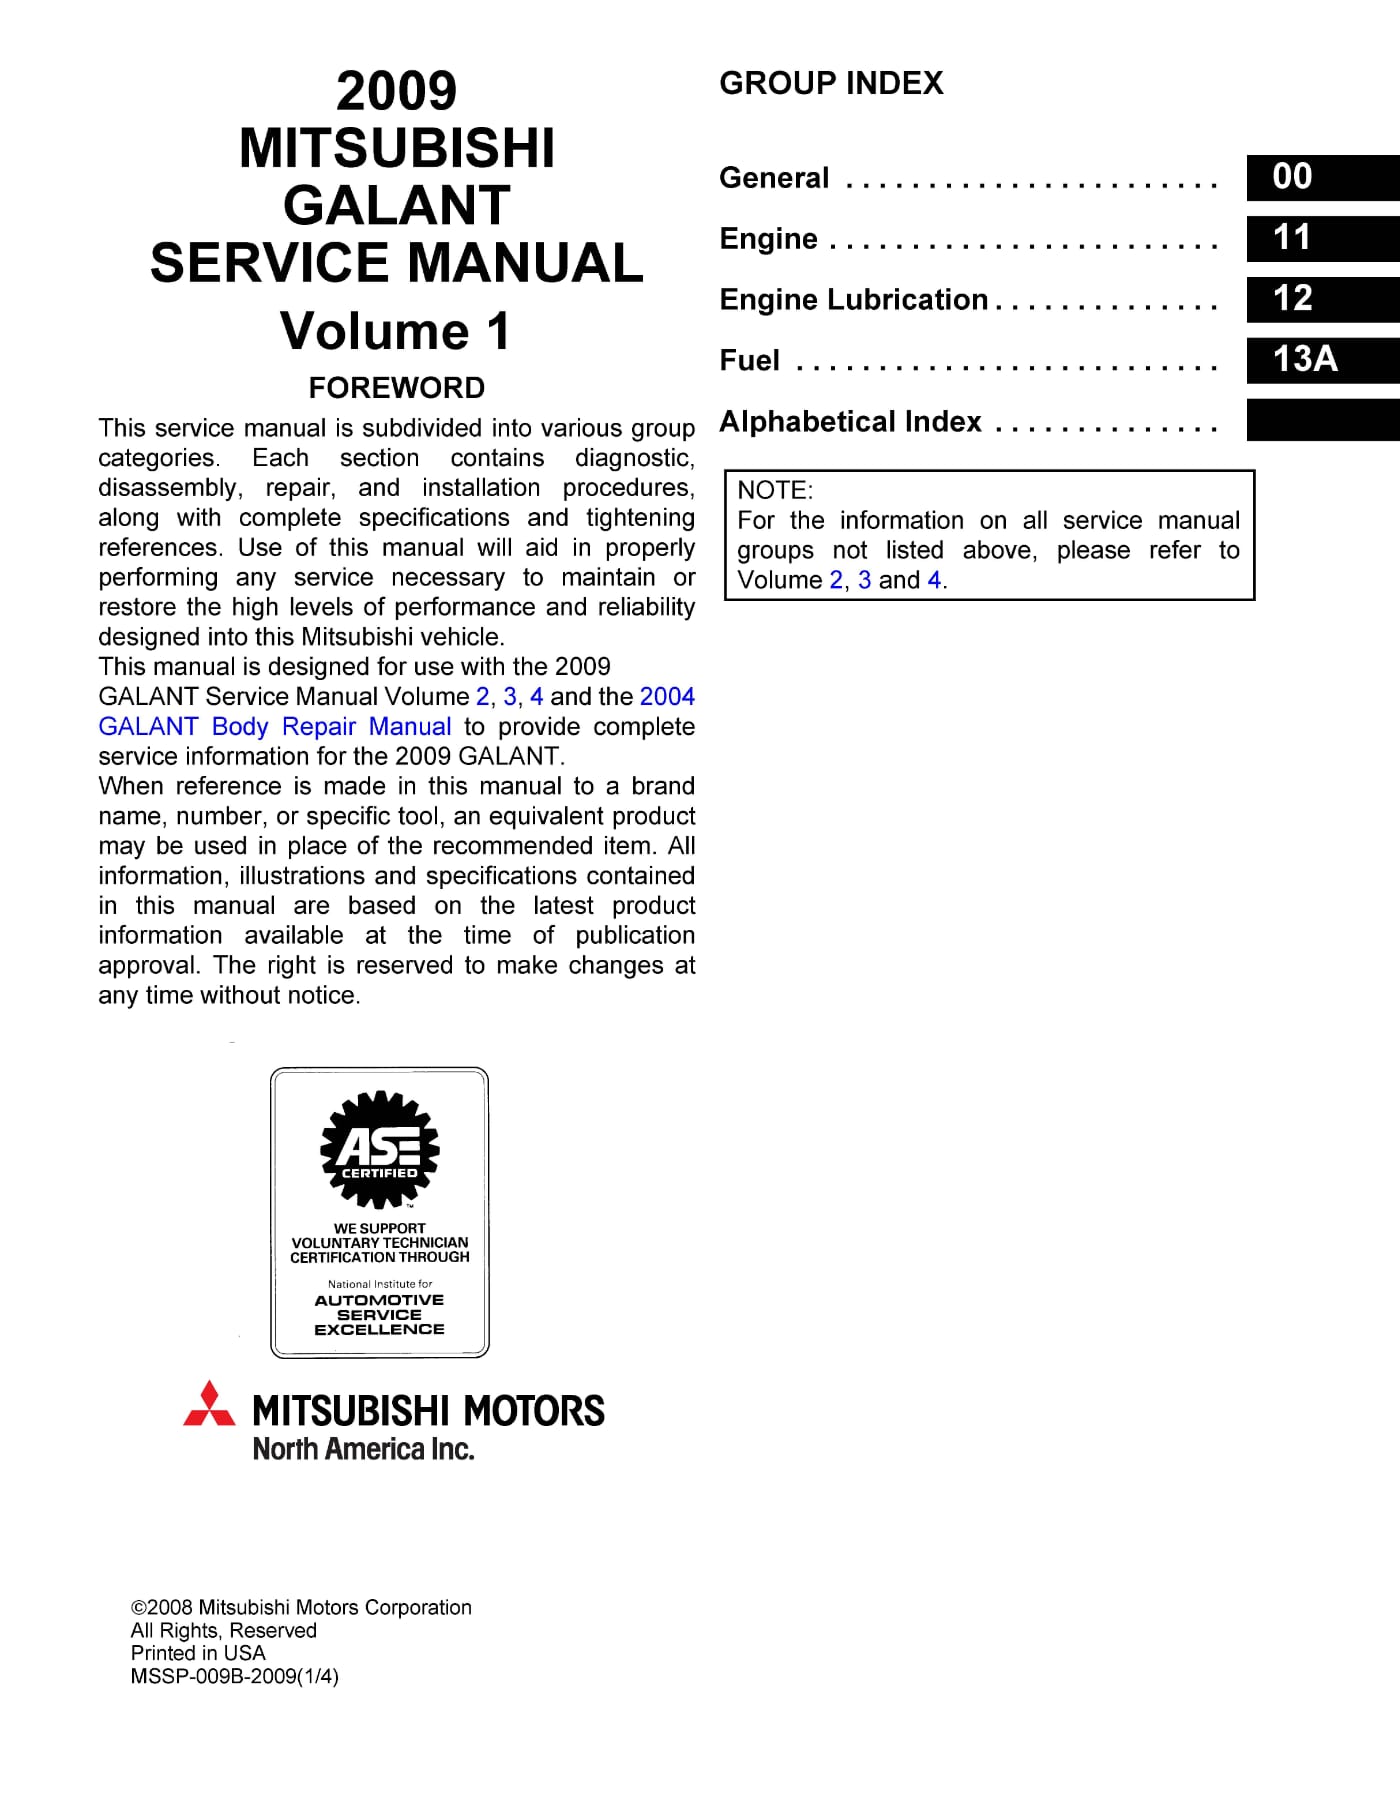 Table of Contents 2009-2012 Mitsubishi Galant Repair Manual - Volume 1